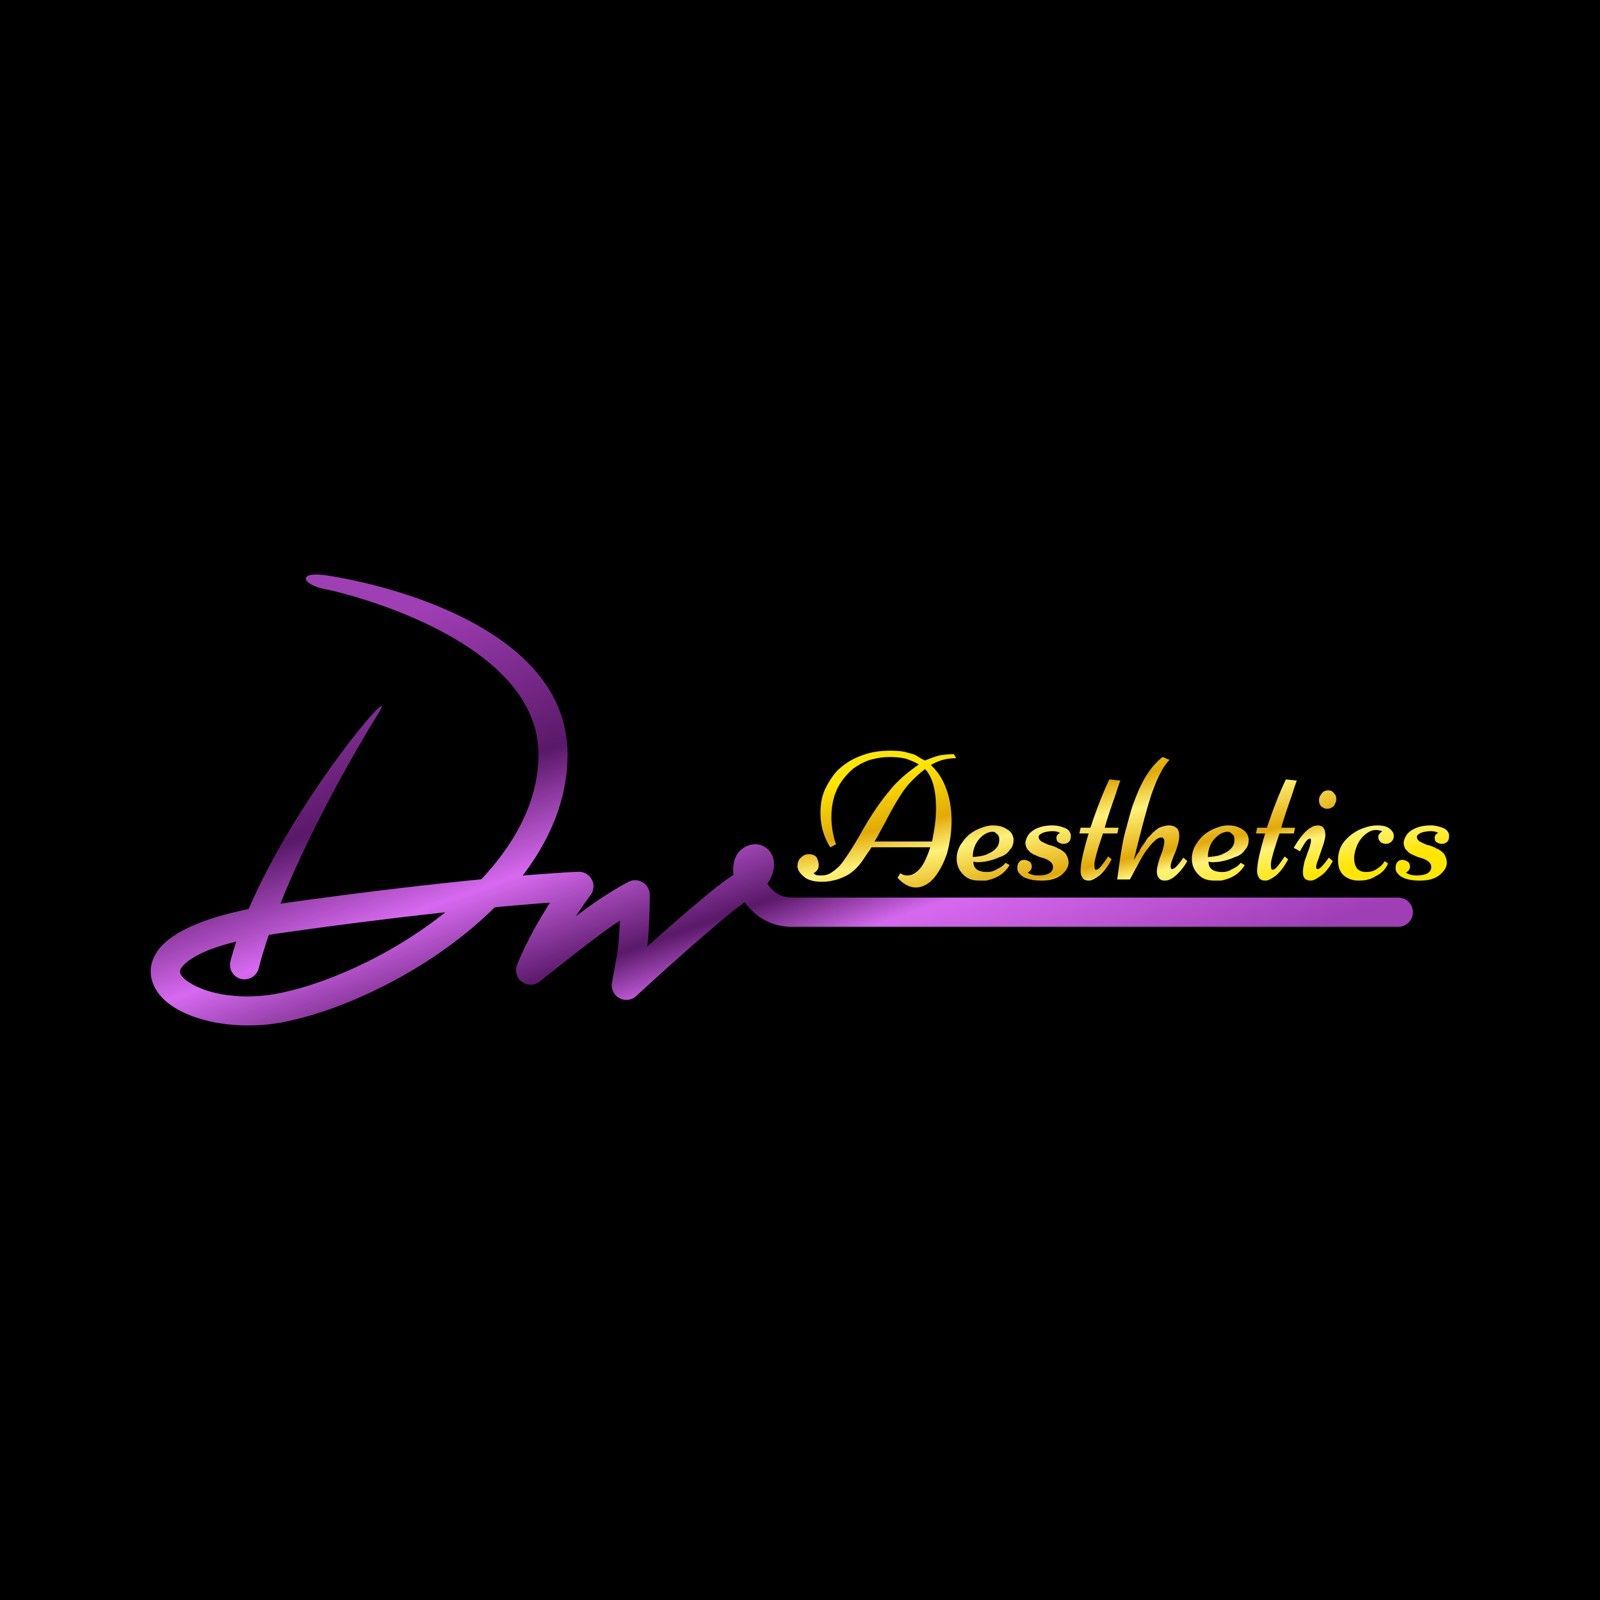 D.W. Aesthetic & Artistry, 5035 Willis Ave., Dallas, 75206